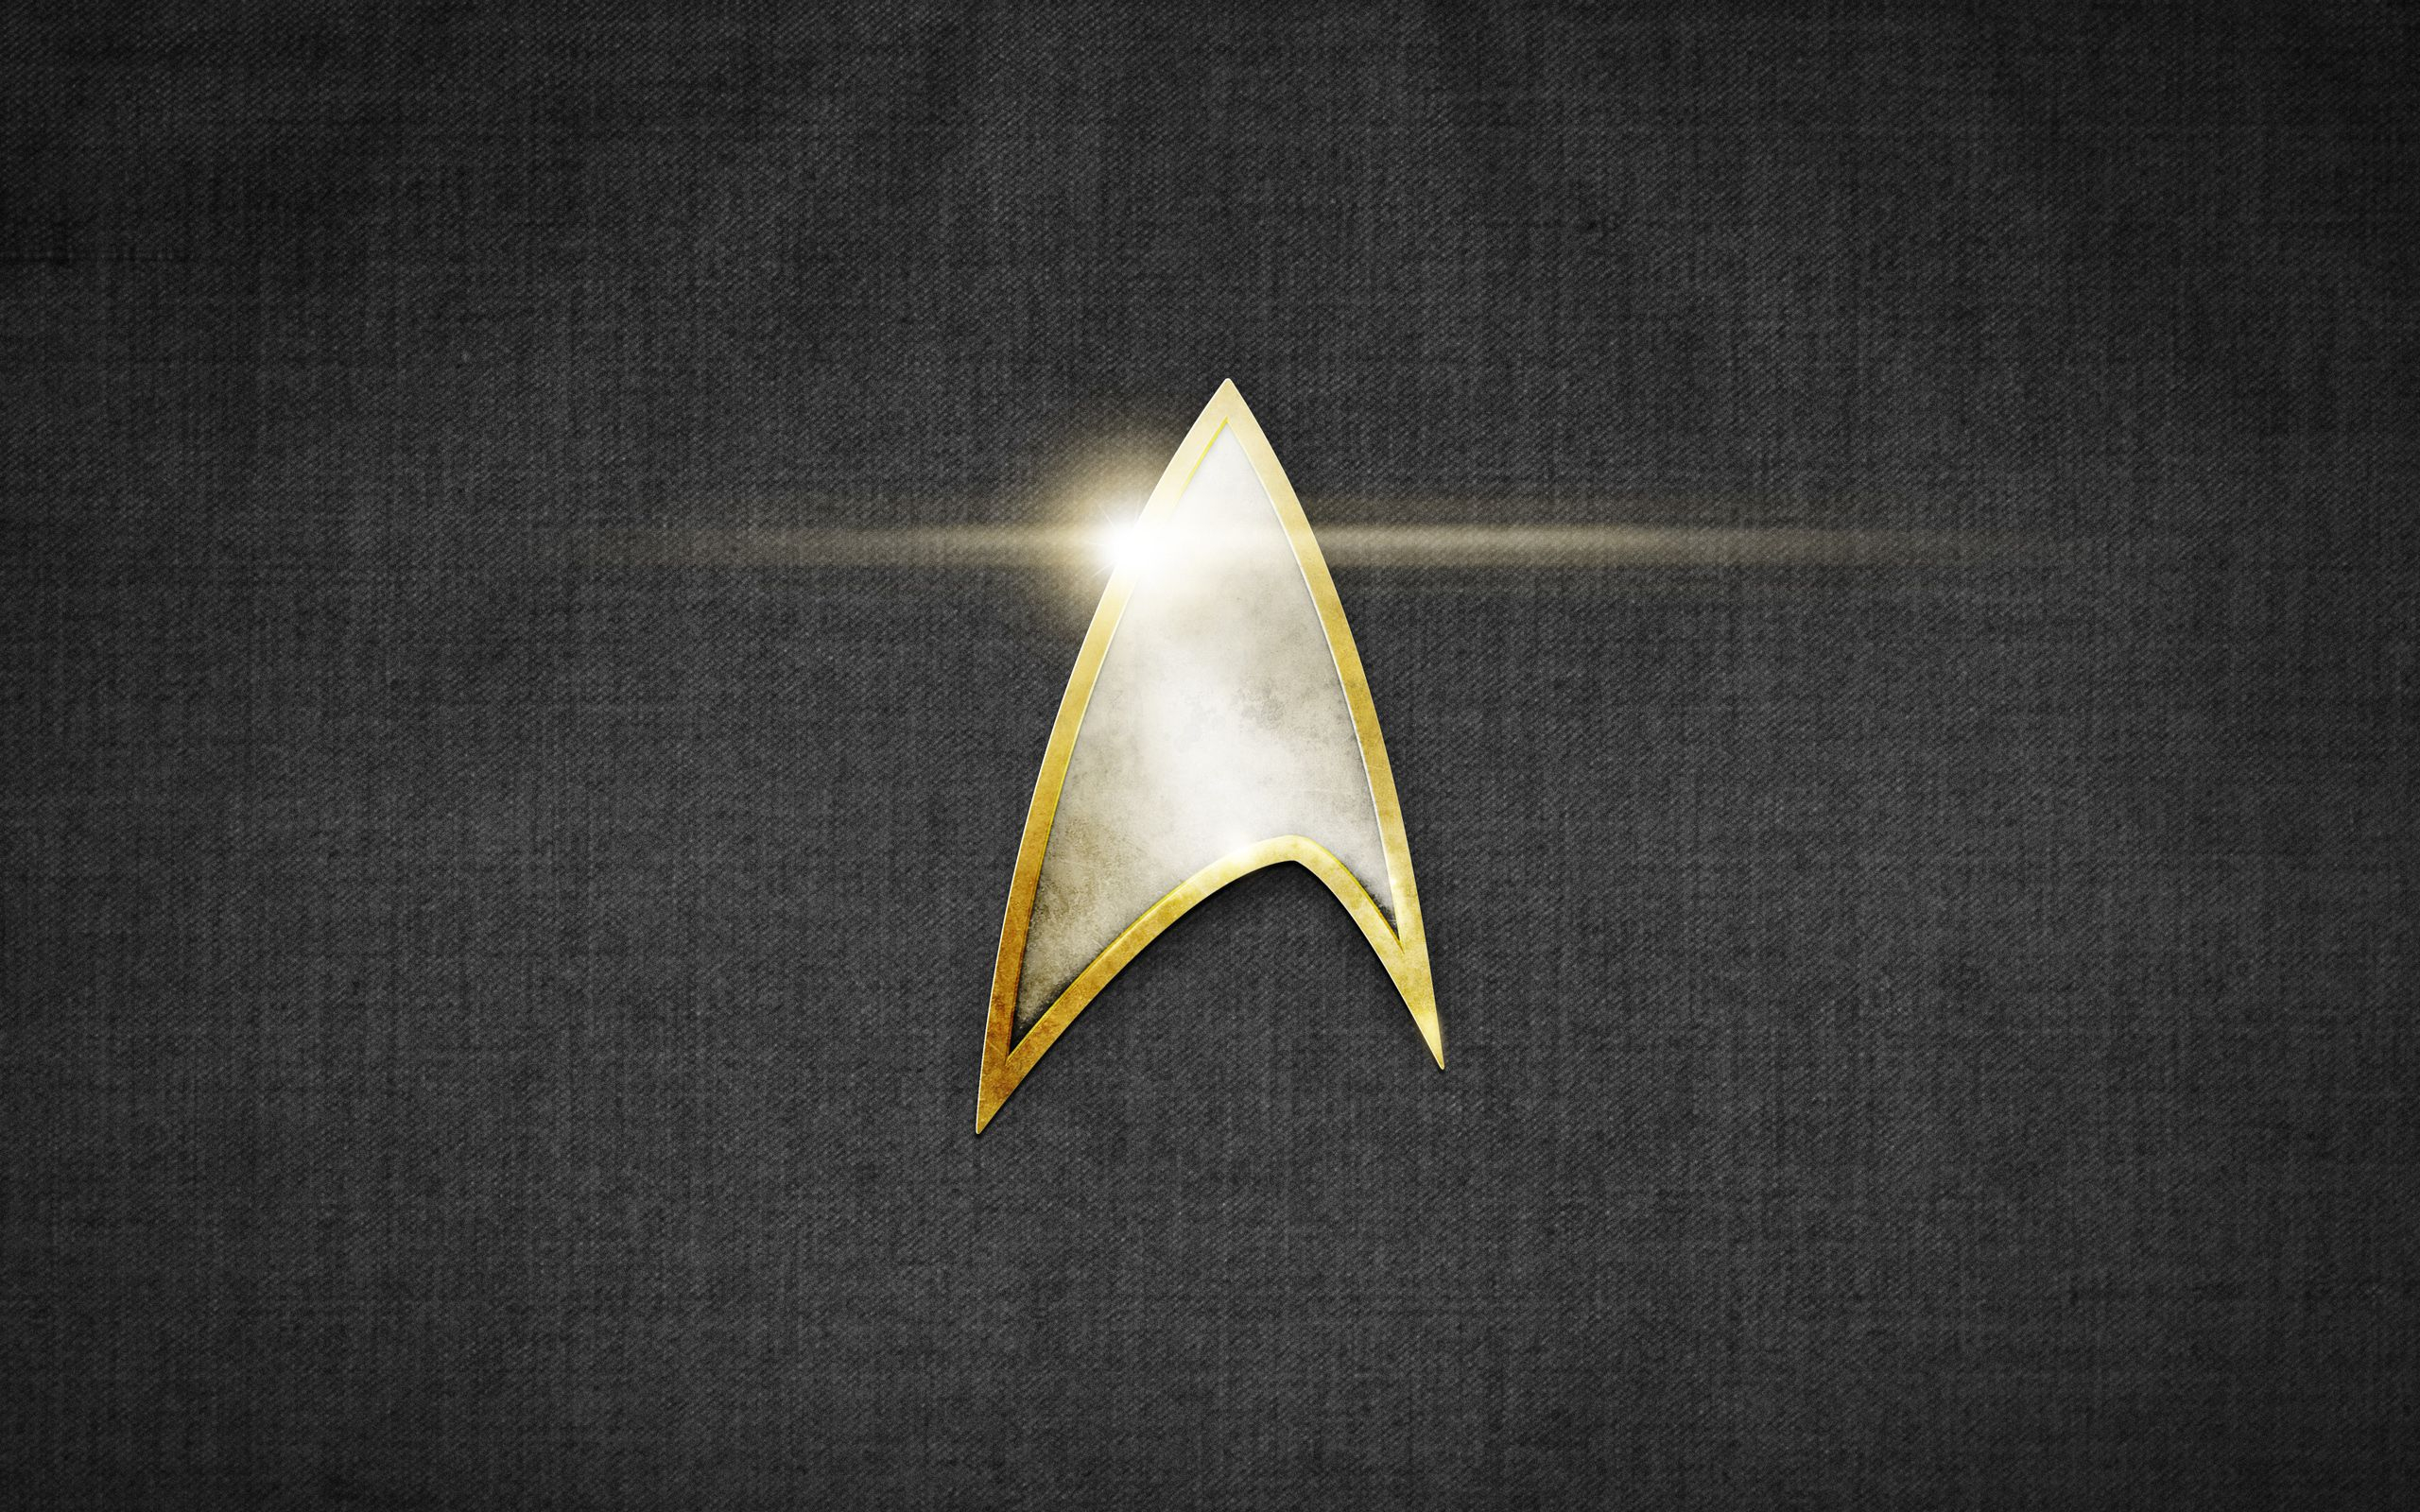 2560x1600 Star Trek Insignia Wallpapers Top Free Star Trek Insignia Backgrounds